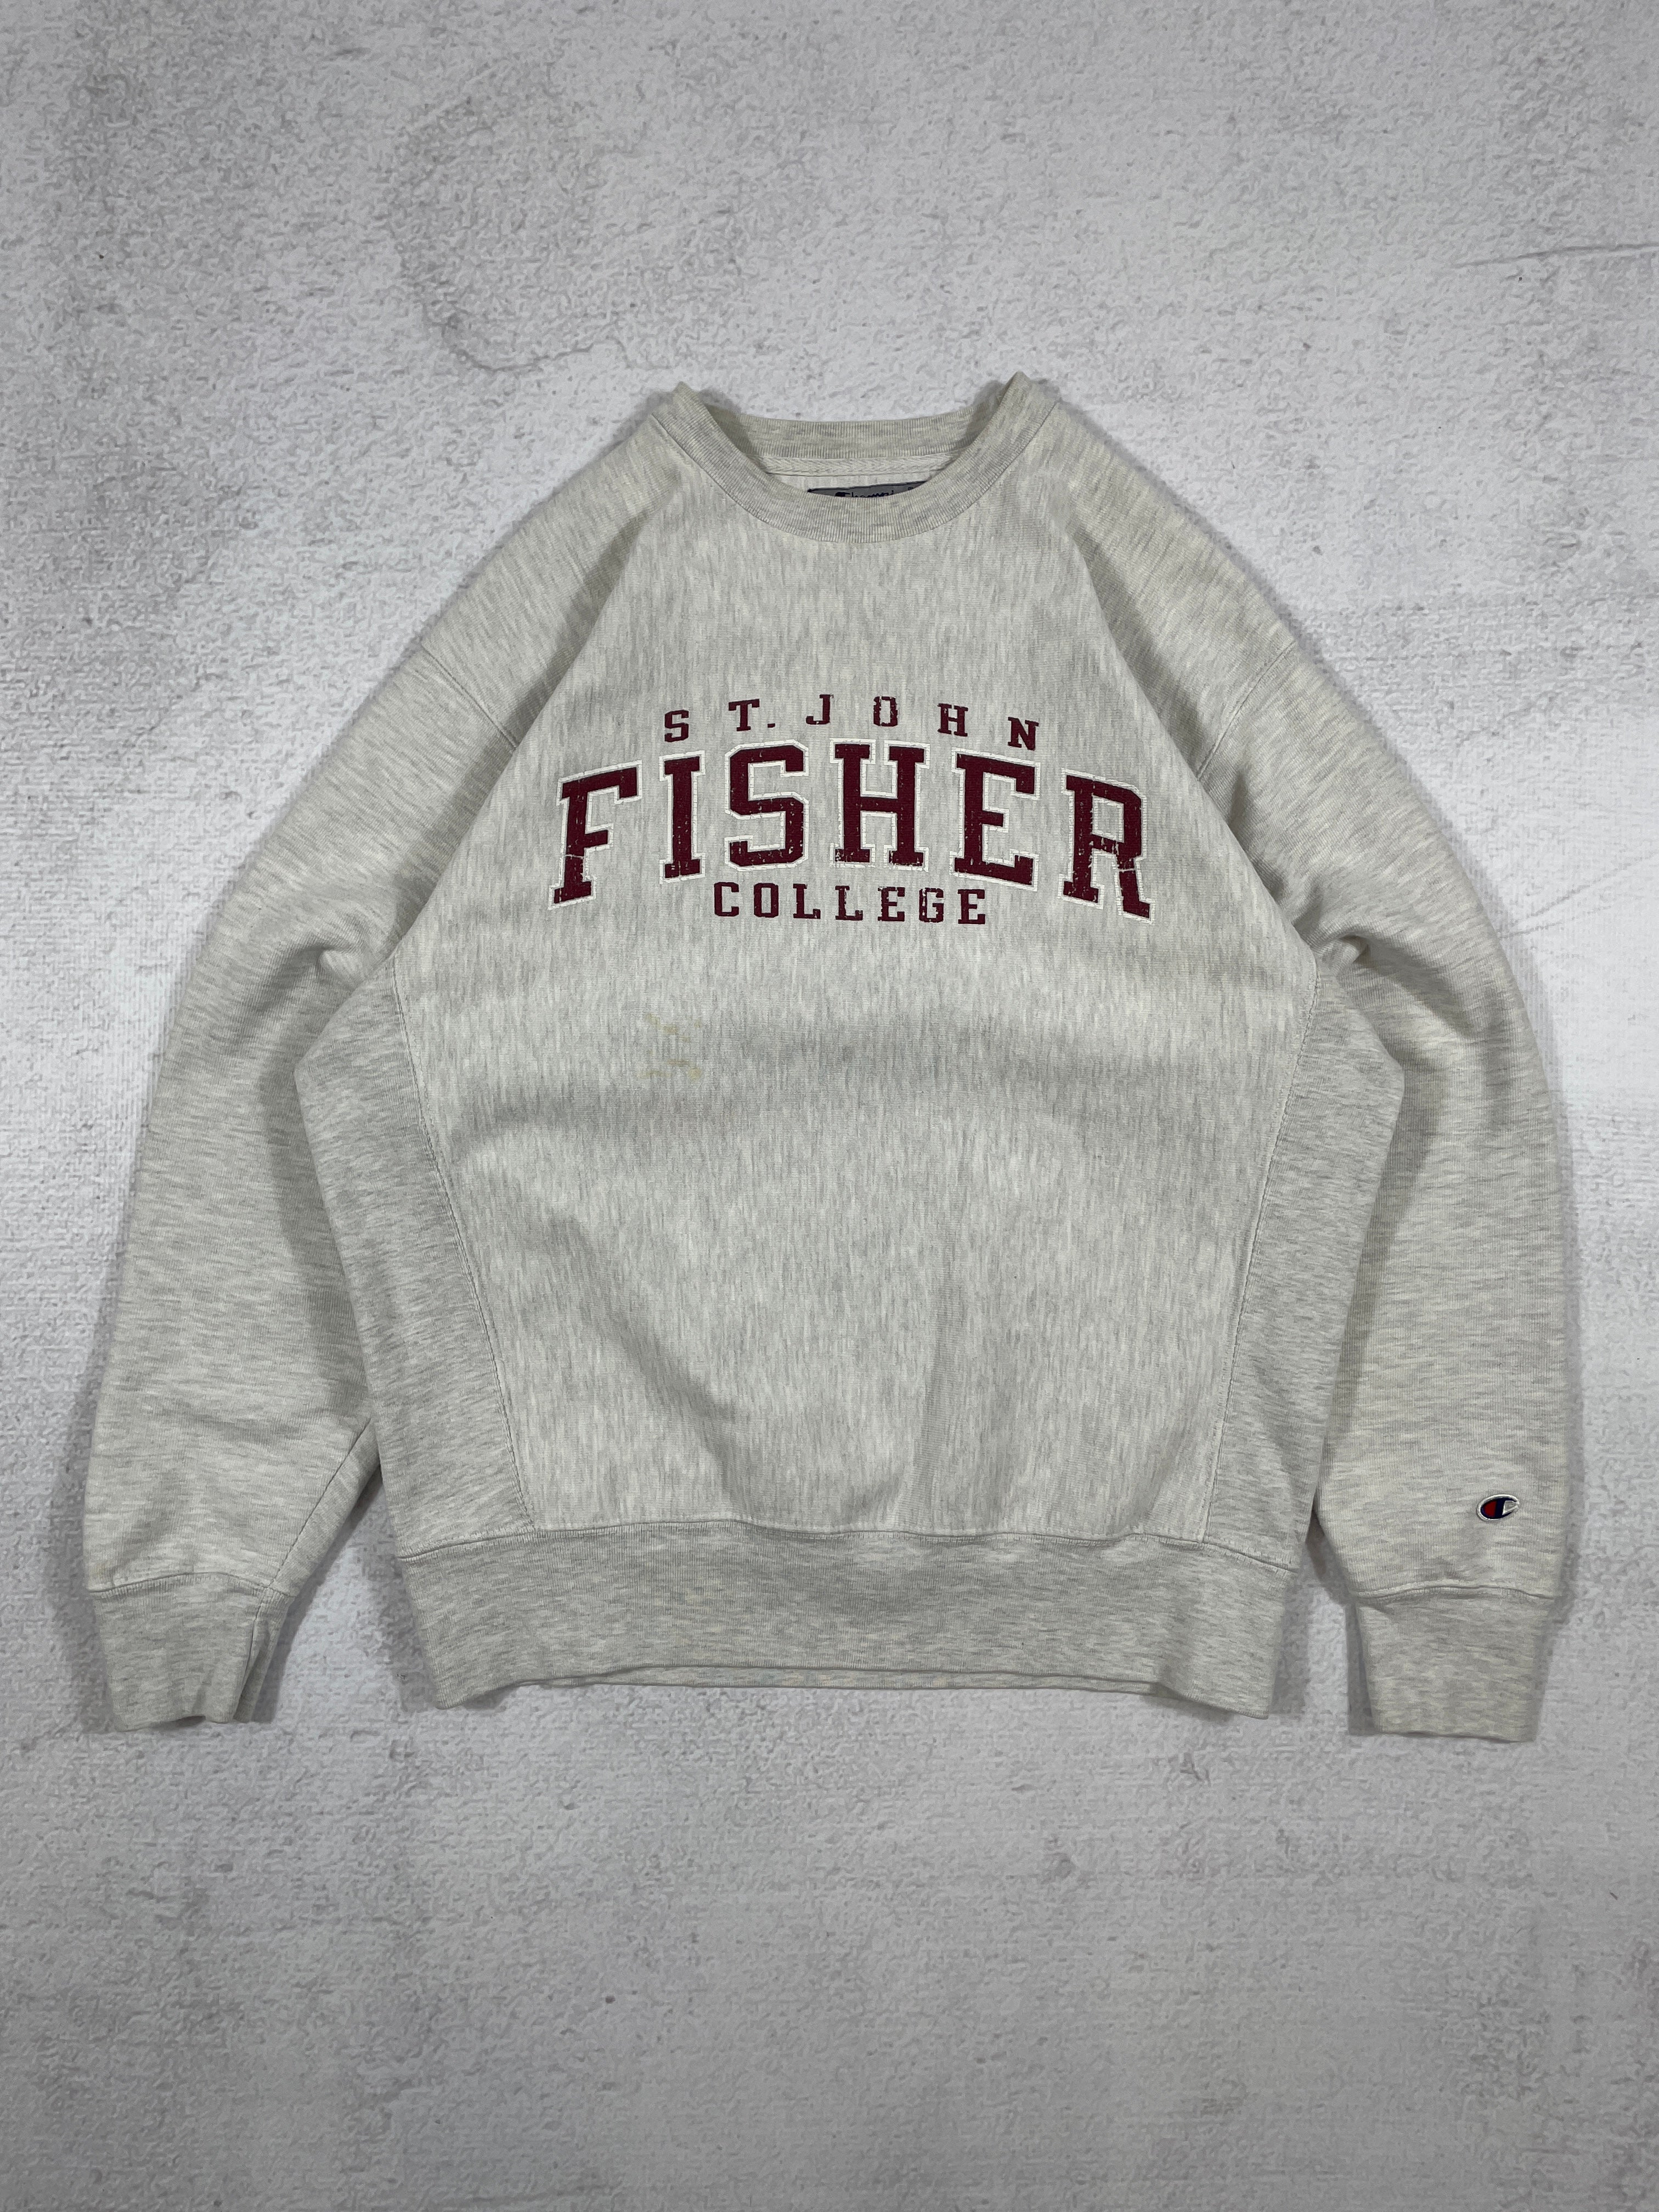 Vintage Champion St. John Fisher College Reverse Weave Crewneck Sweatshirt - Men's Medium